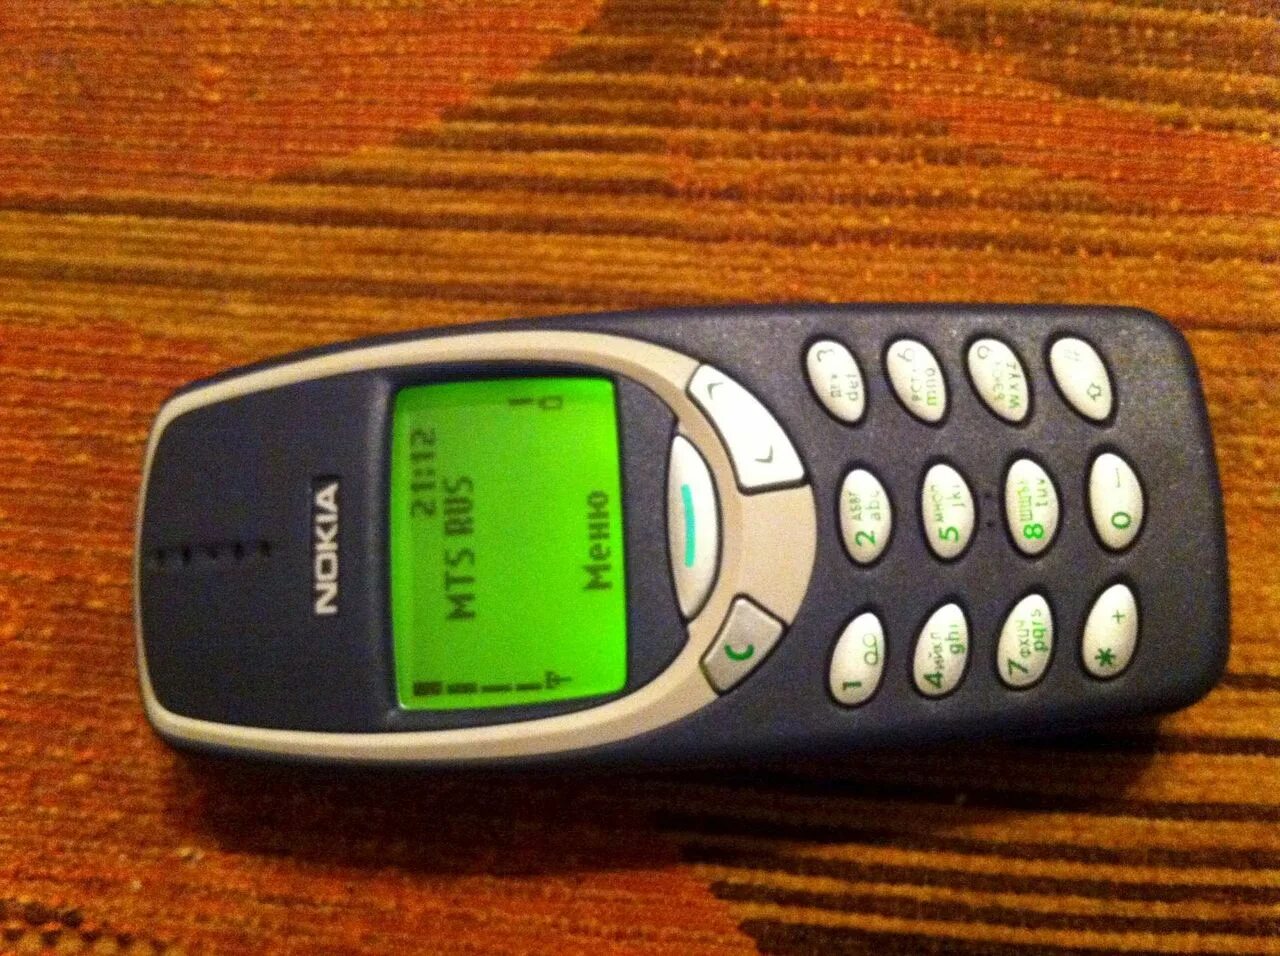 Nokia 33 10. Nokia 3310. Нокиа 33. Айфон и нокиа 33 10. F 33 10